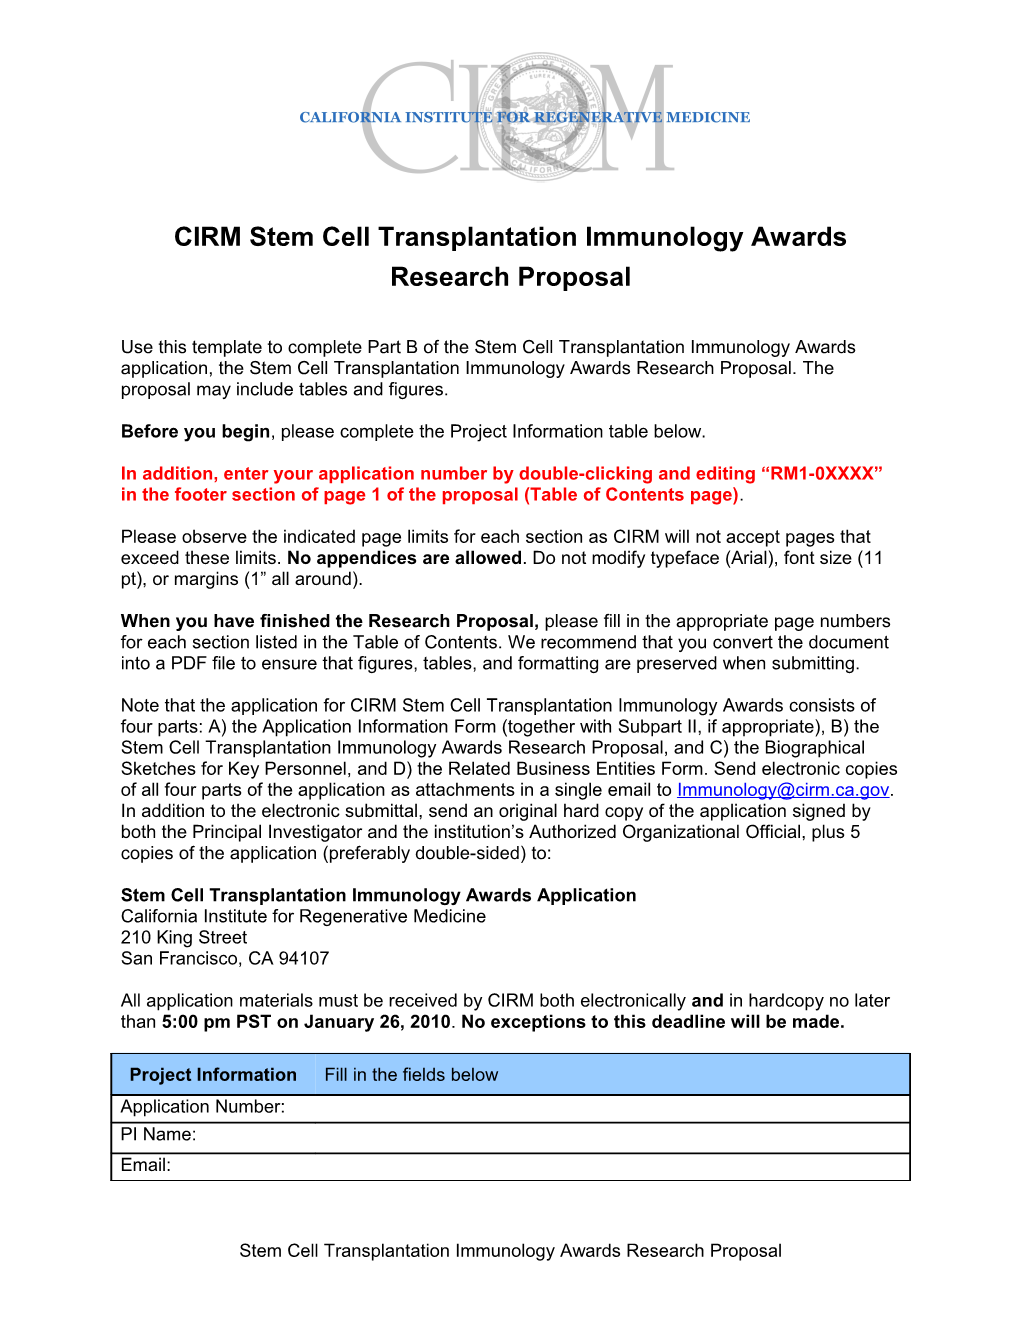 CIRM Basic Biology Awards I Research Proposal